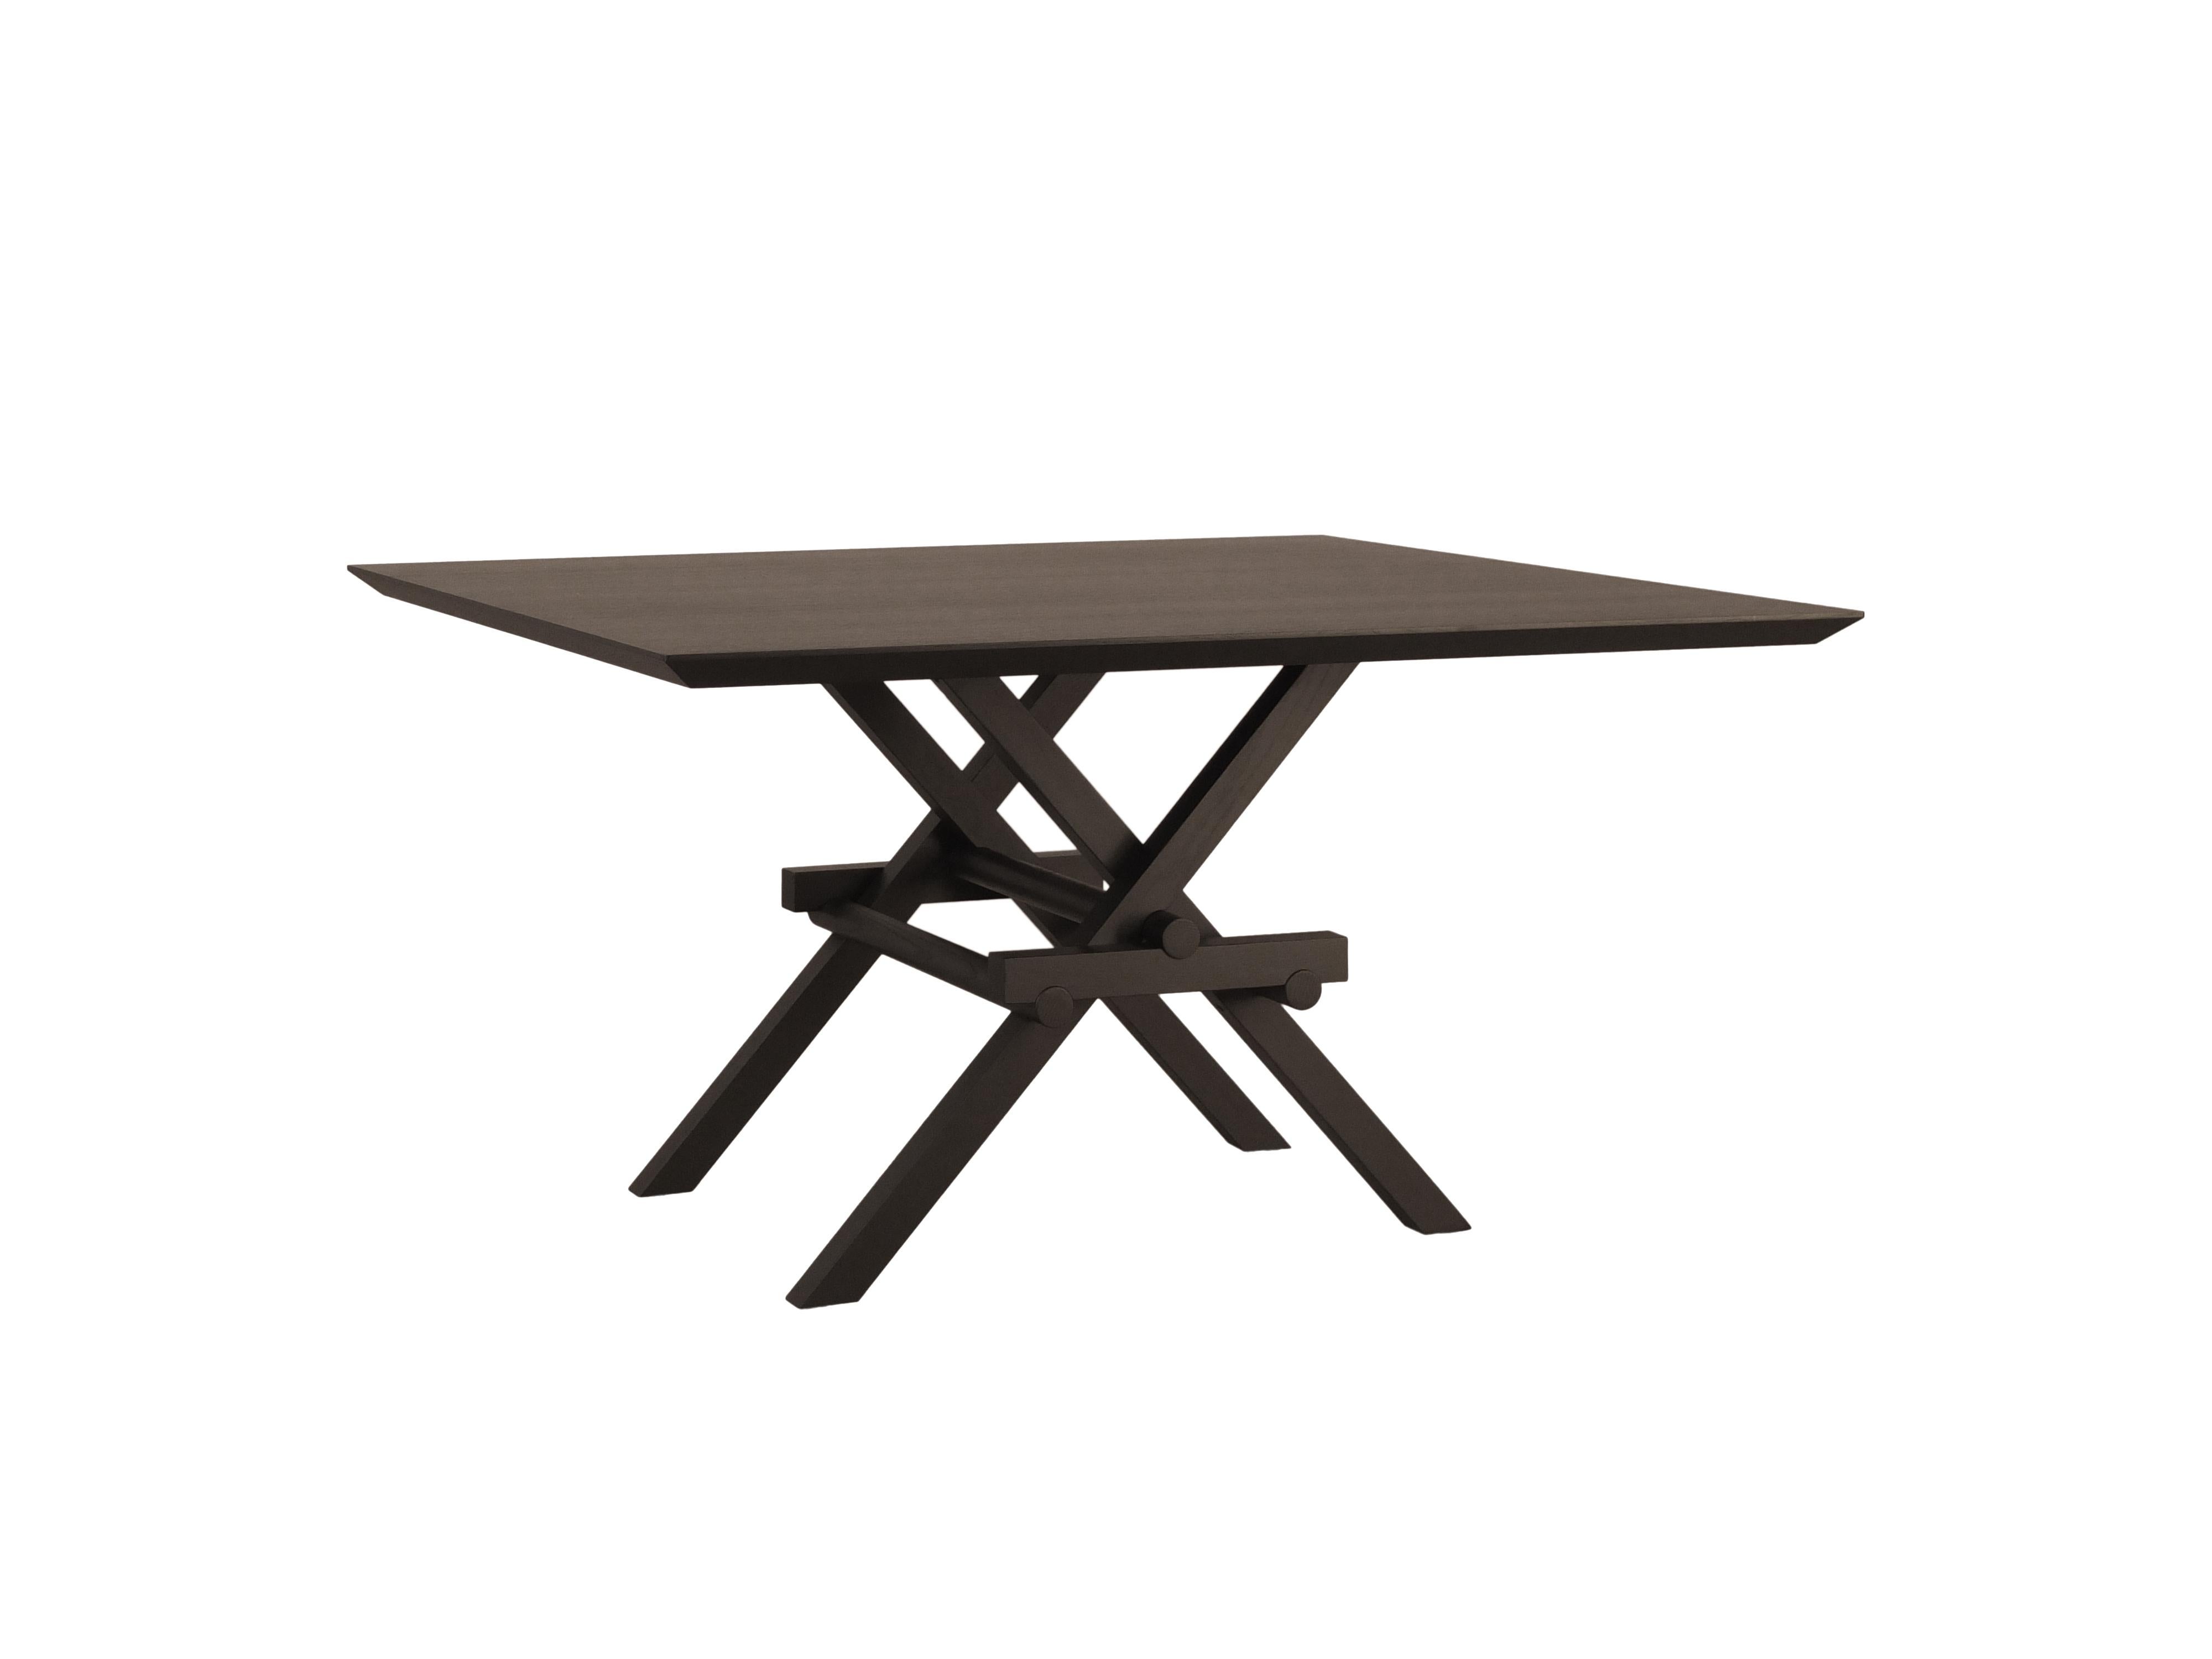 Leonardo Contemporary Table Made of Ashwood with Interlocking Legs 1